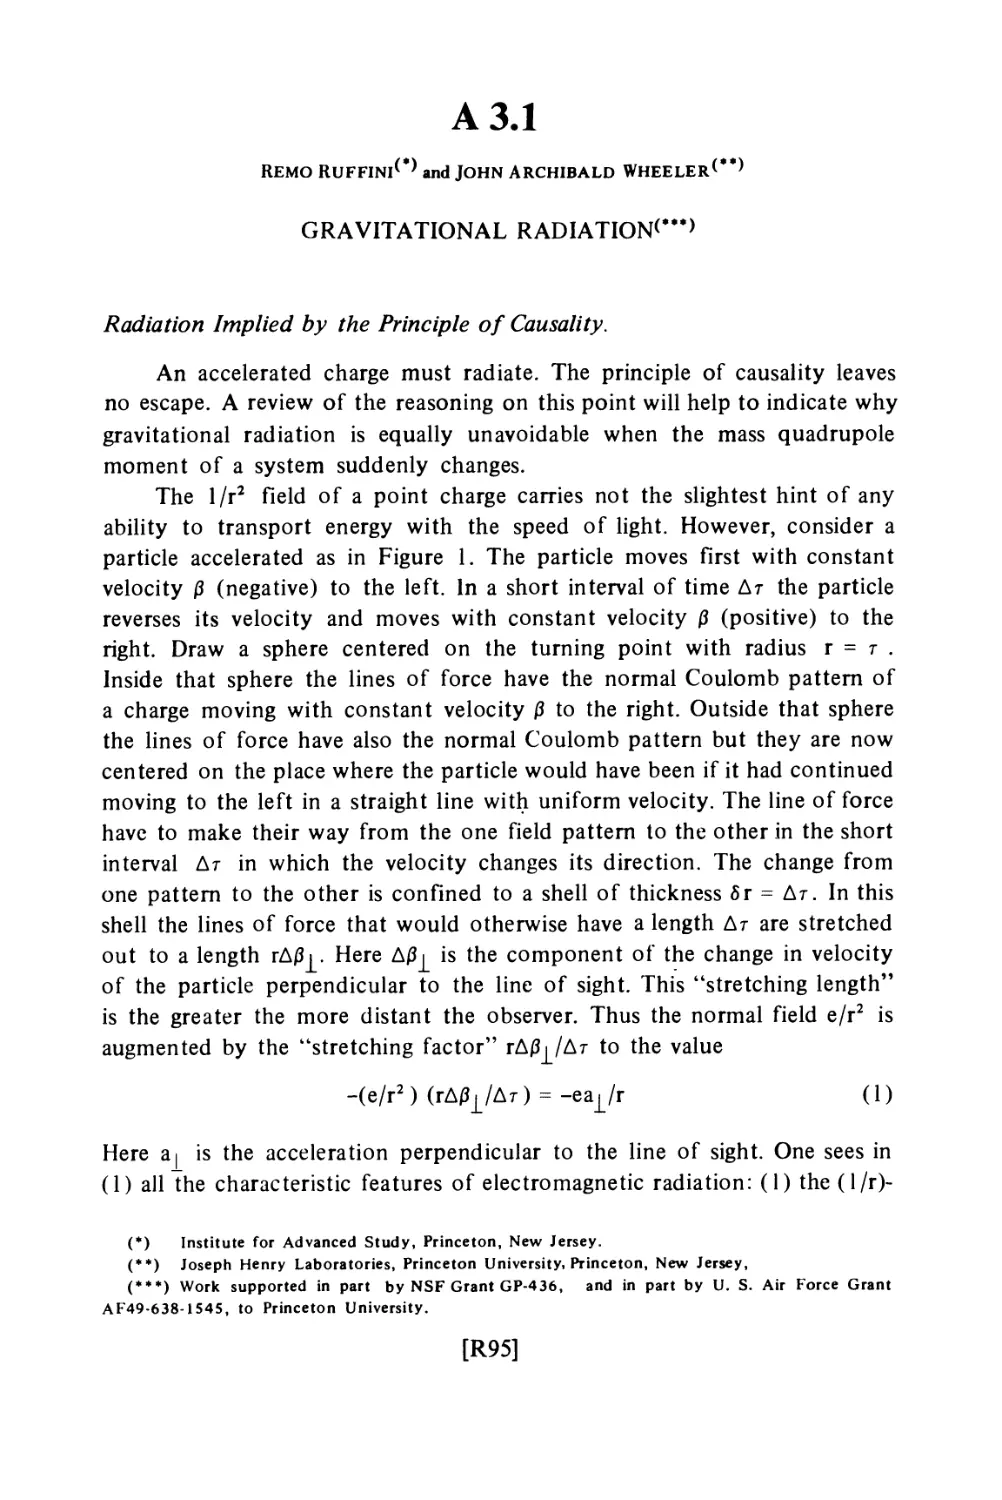 Appendix 3.1 Gravitational Radiation / R. Ruffini and J. A. Wheeler